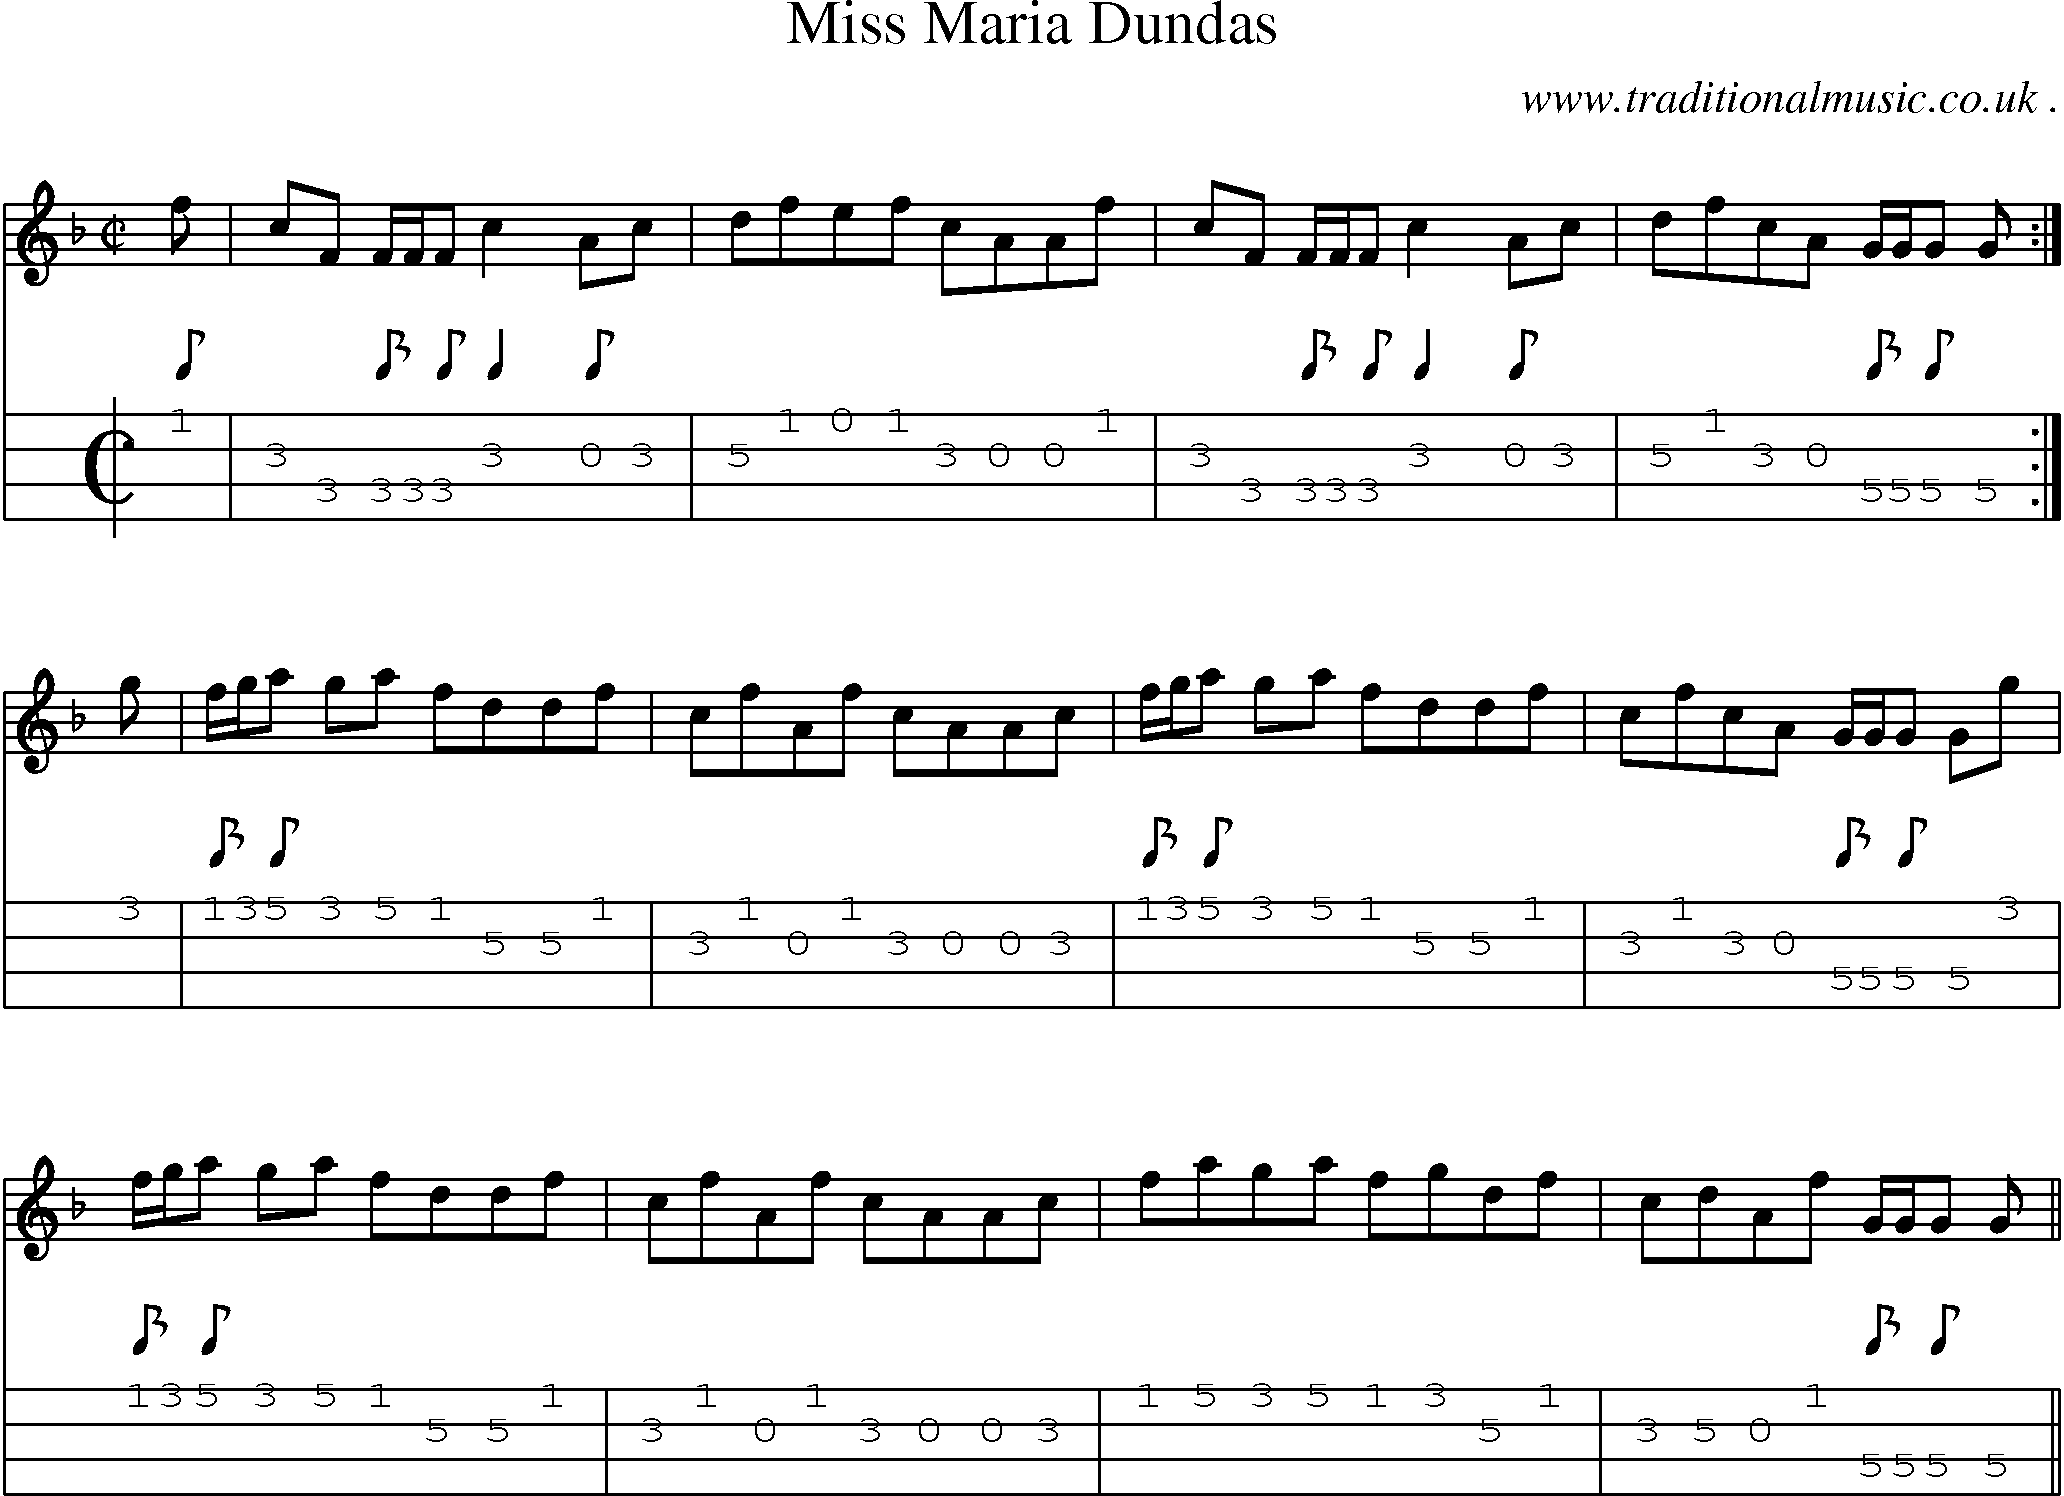 Sheet-music  score, Chords and Mandolin Tabs for Miss Maria Dundas